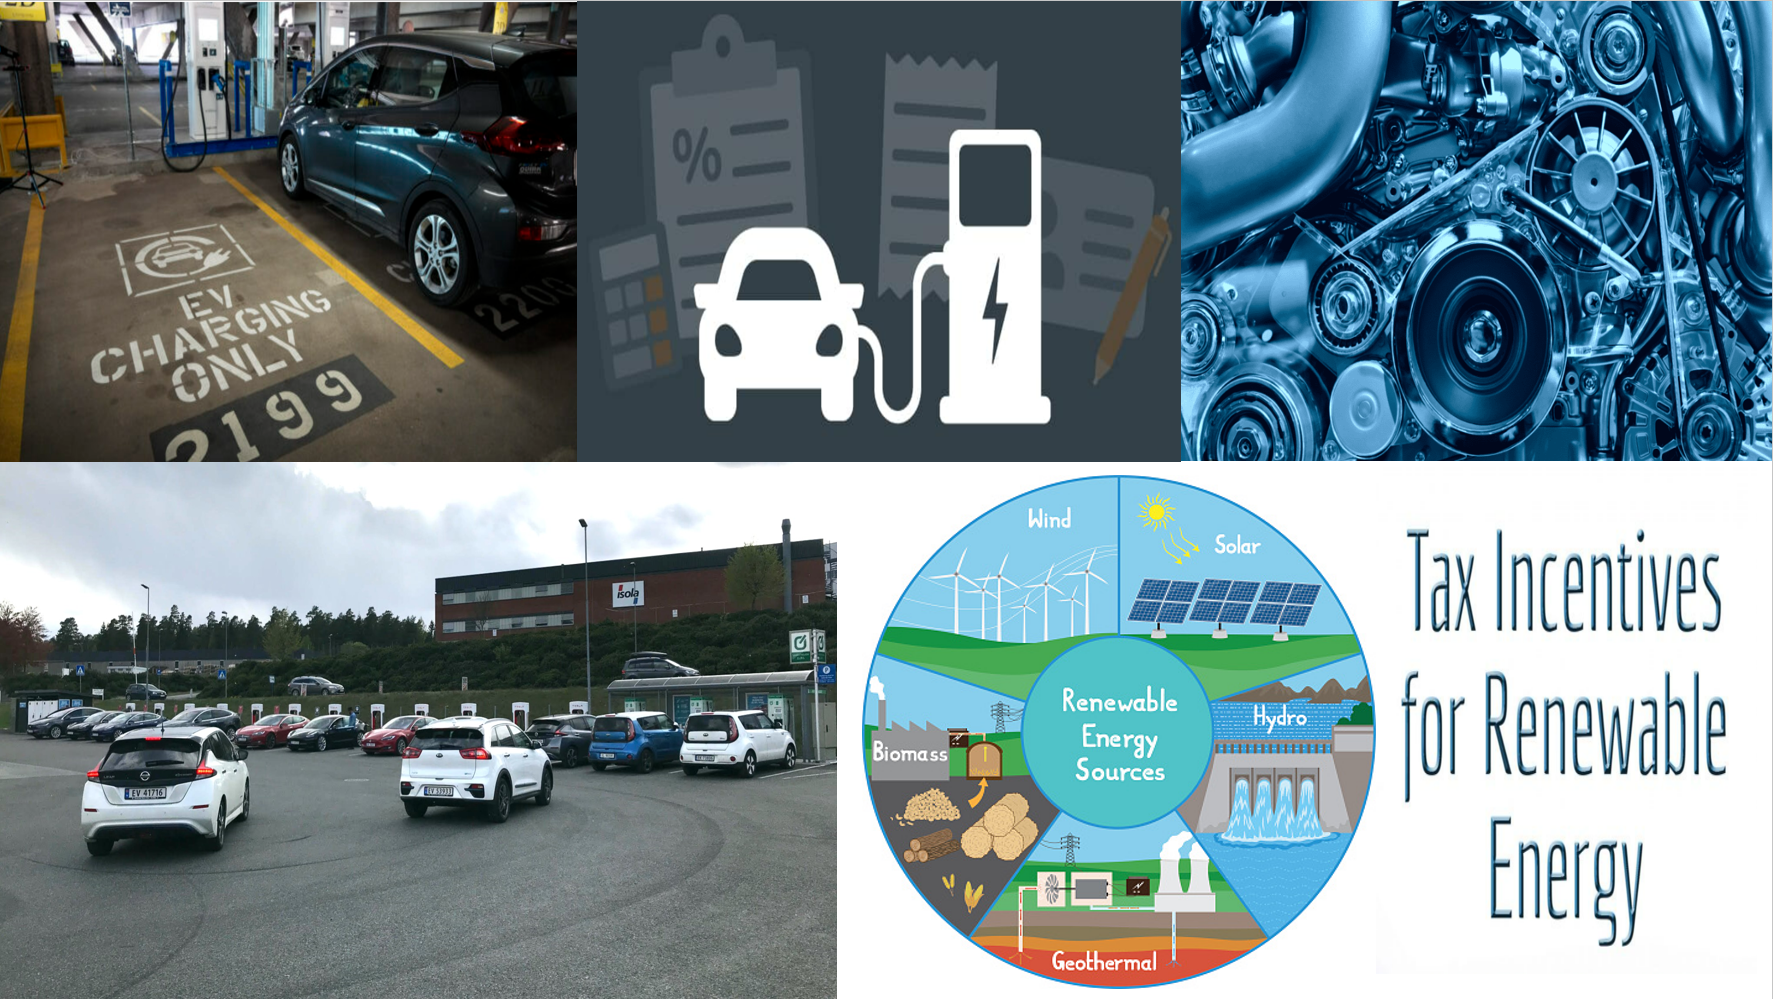 Electric Vehicle Sales & Renewable Energy - Impact on EU\\\'s Carbon Intensity 2013-2019